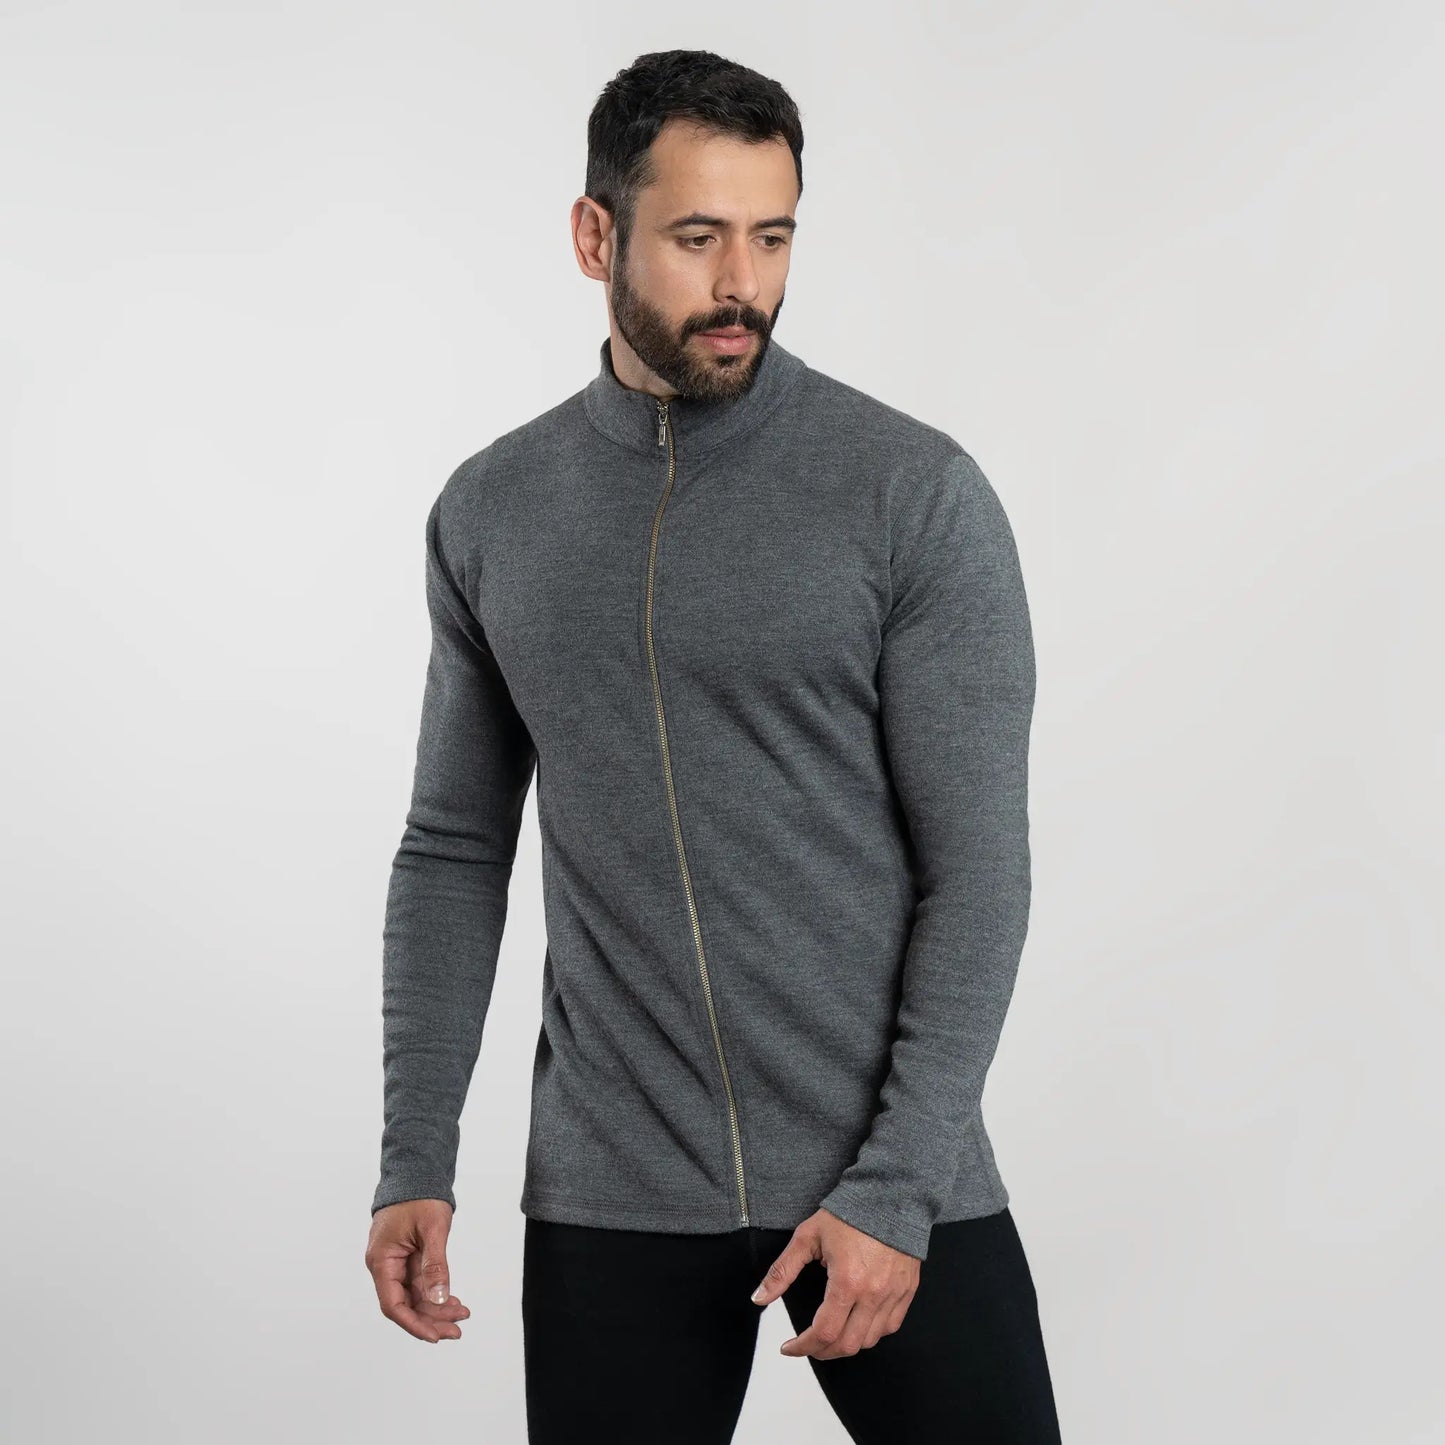 mens warmest jacket full zip color gray